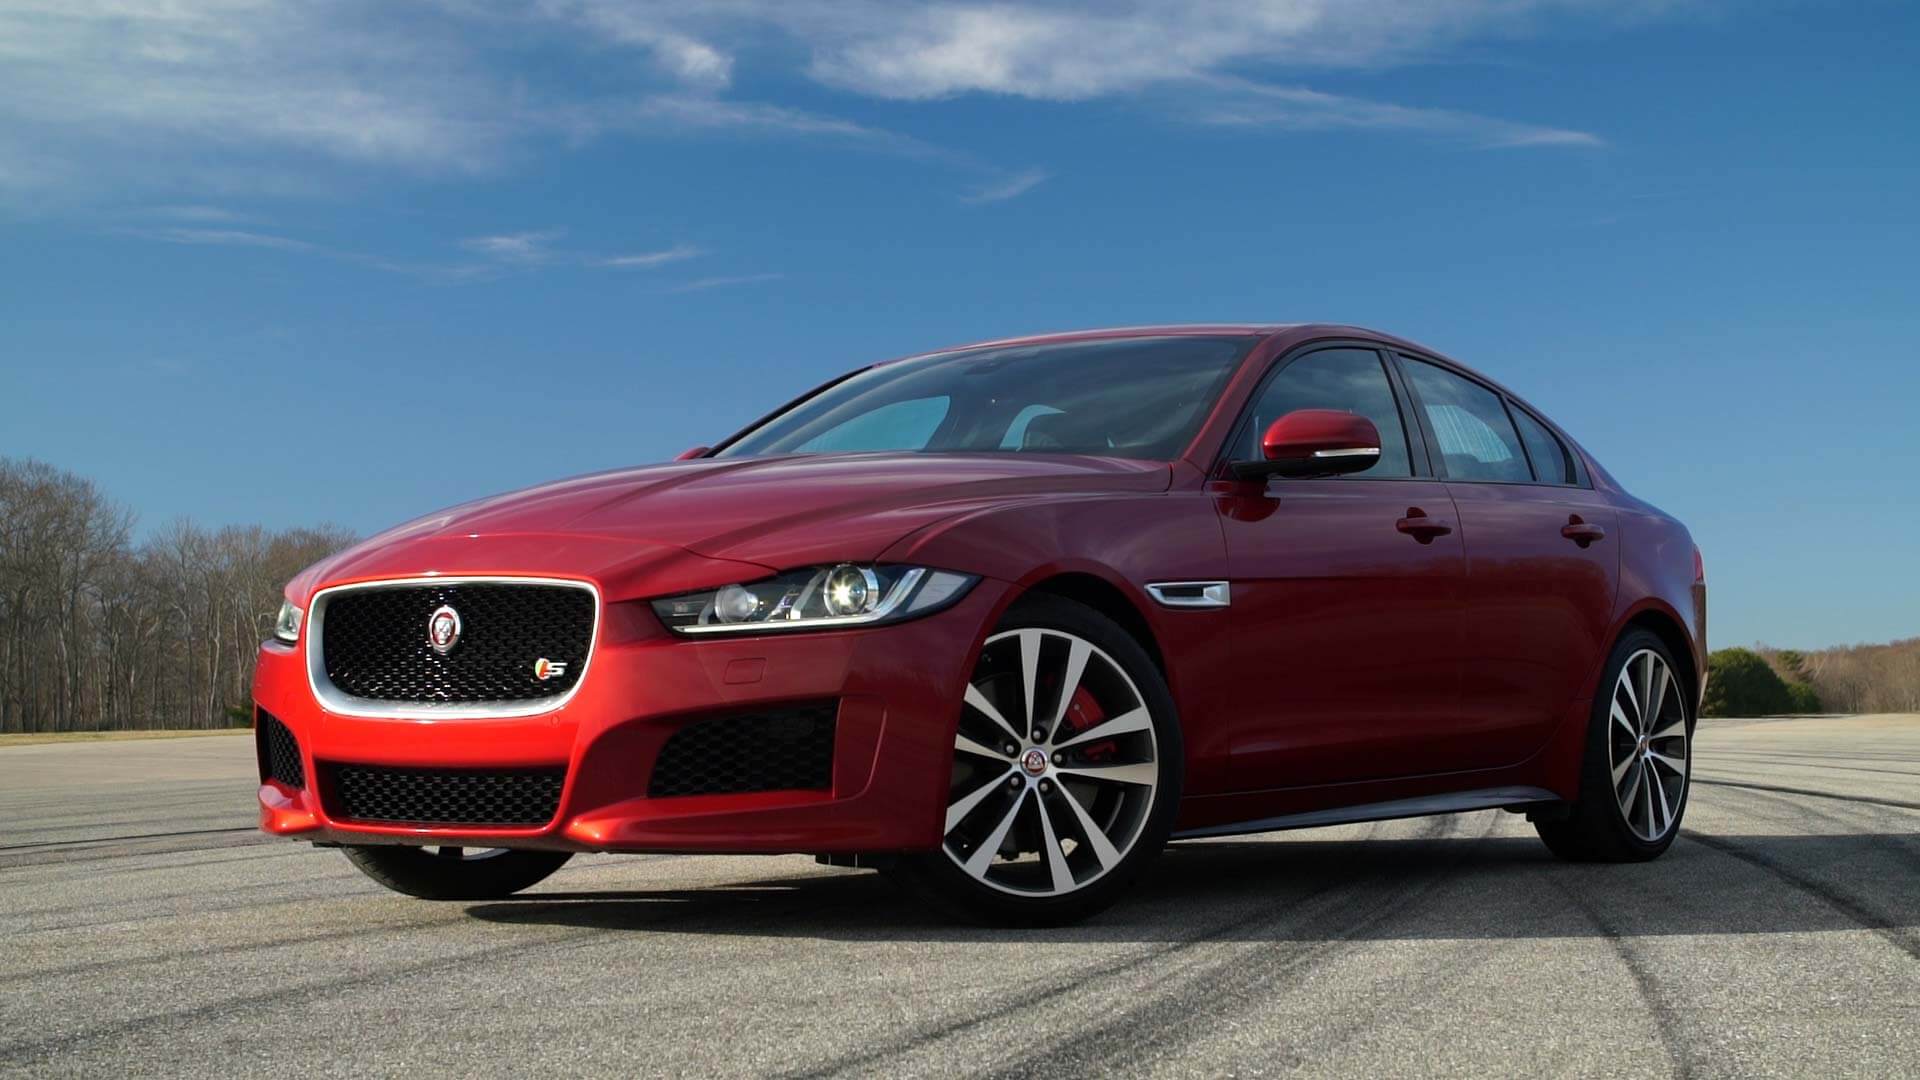 Jaguar introduced an updated version of the XE sedan